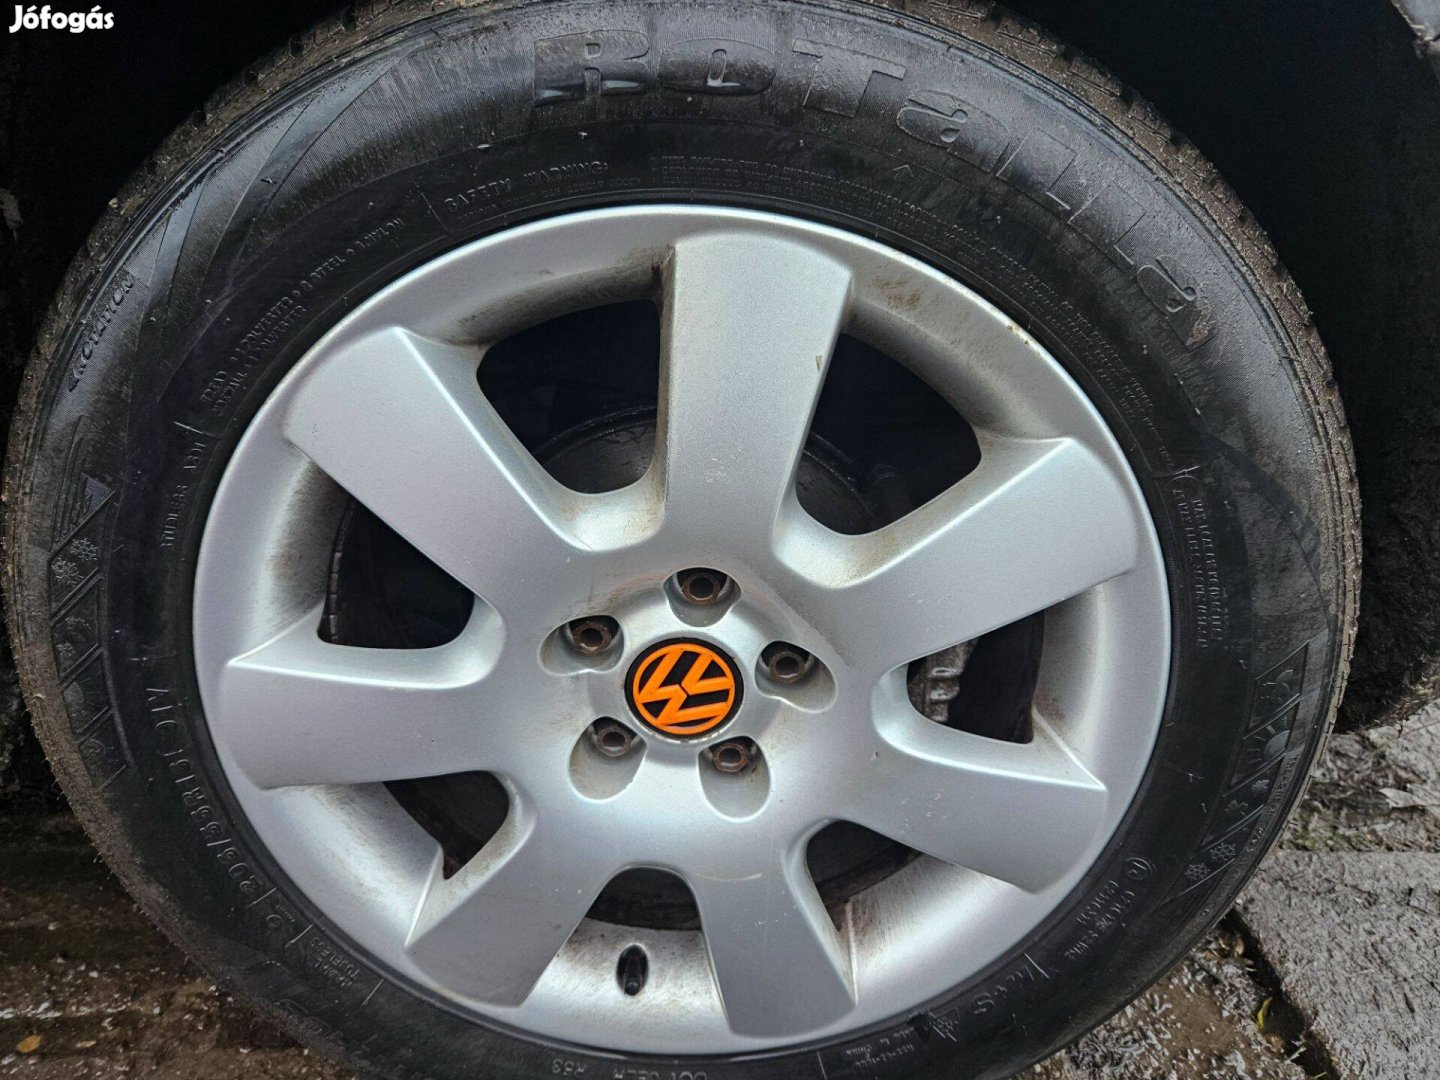 Volkswagen 16" 4db alufelni gumival együtt eladó